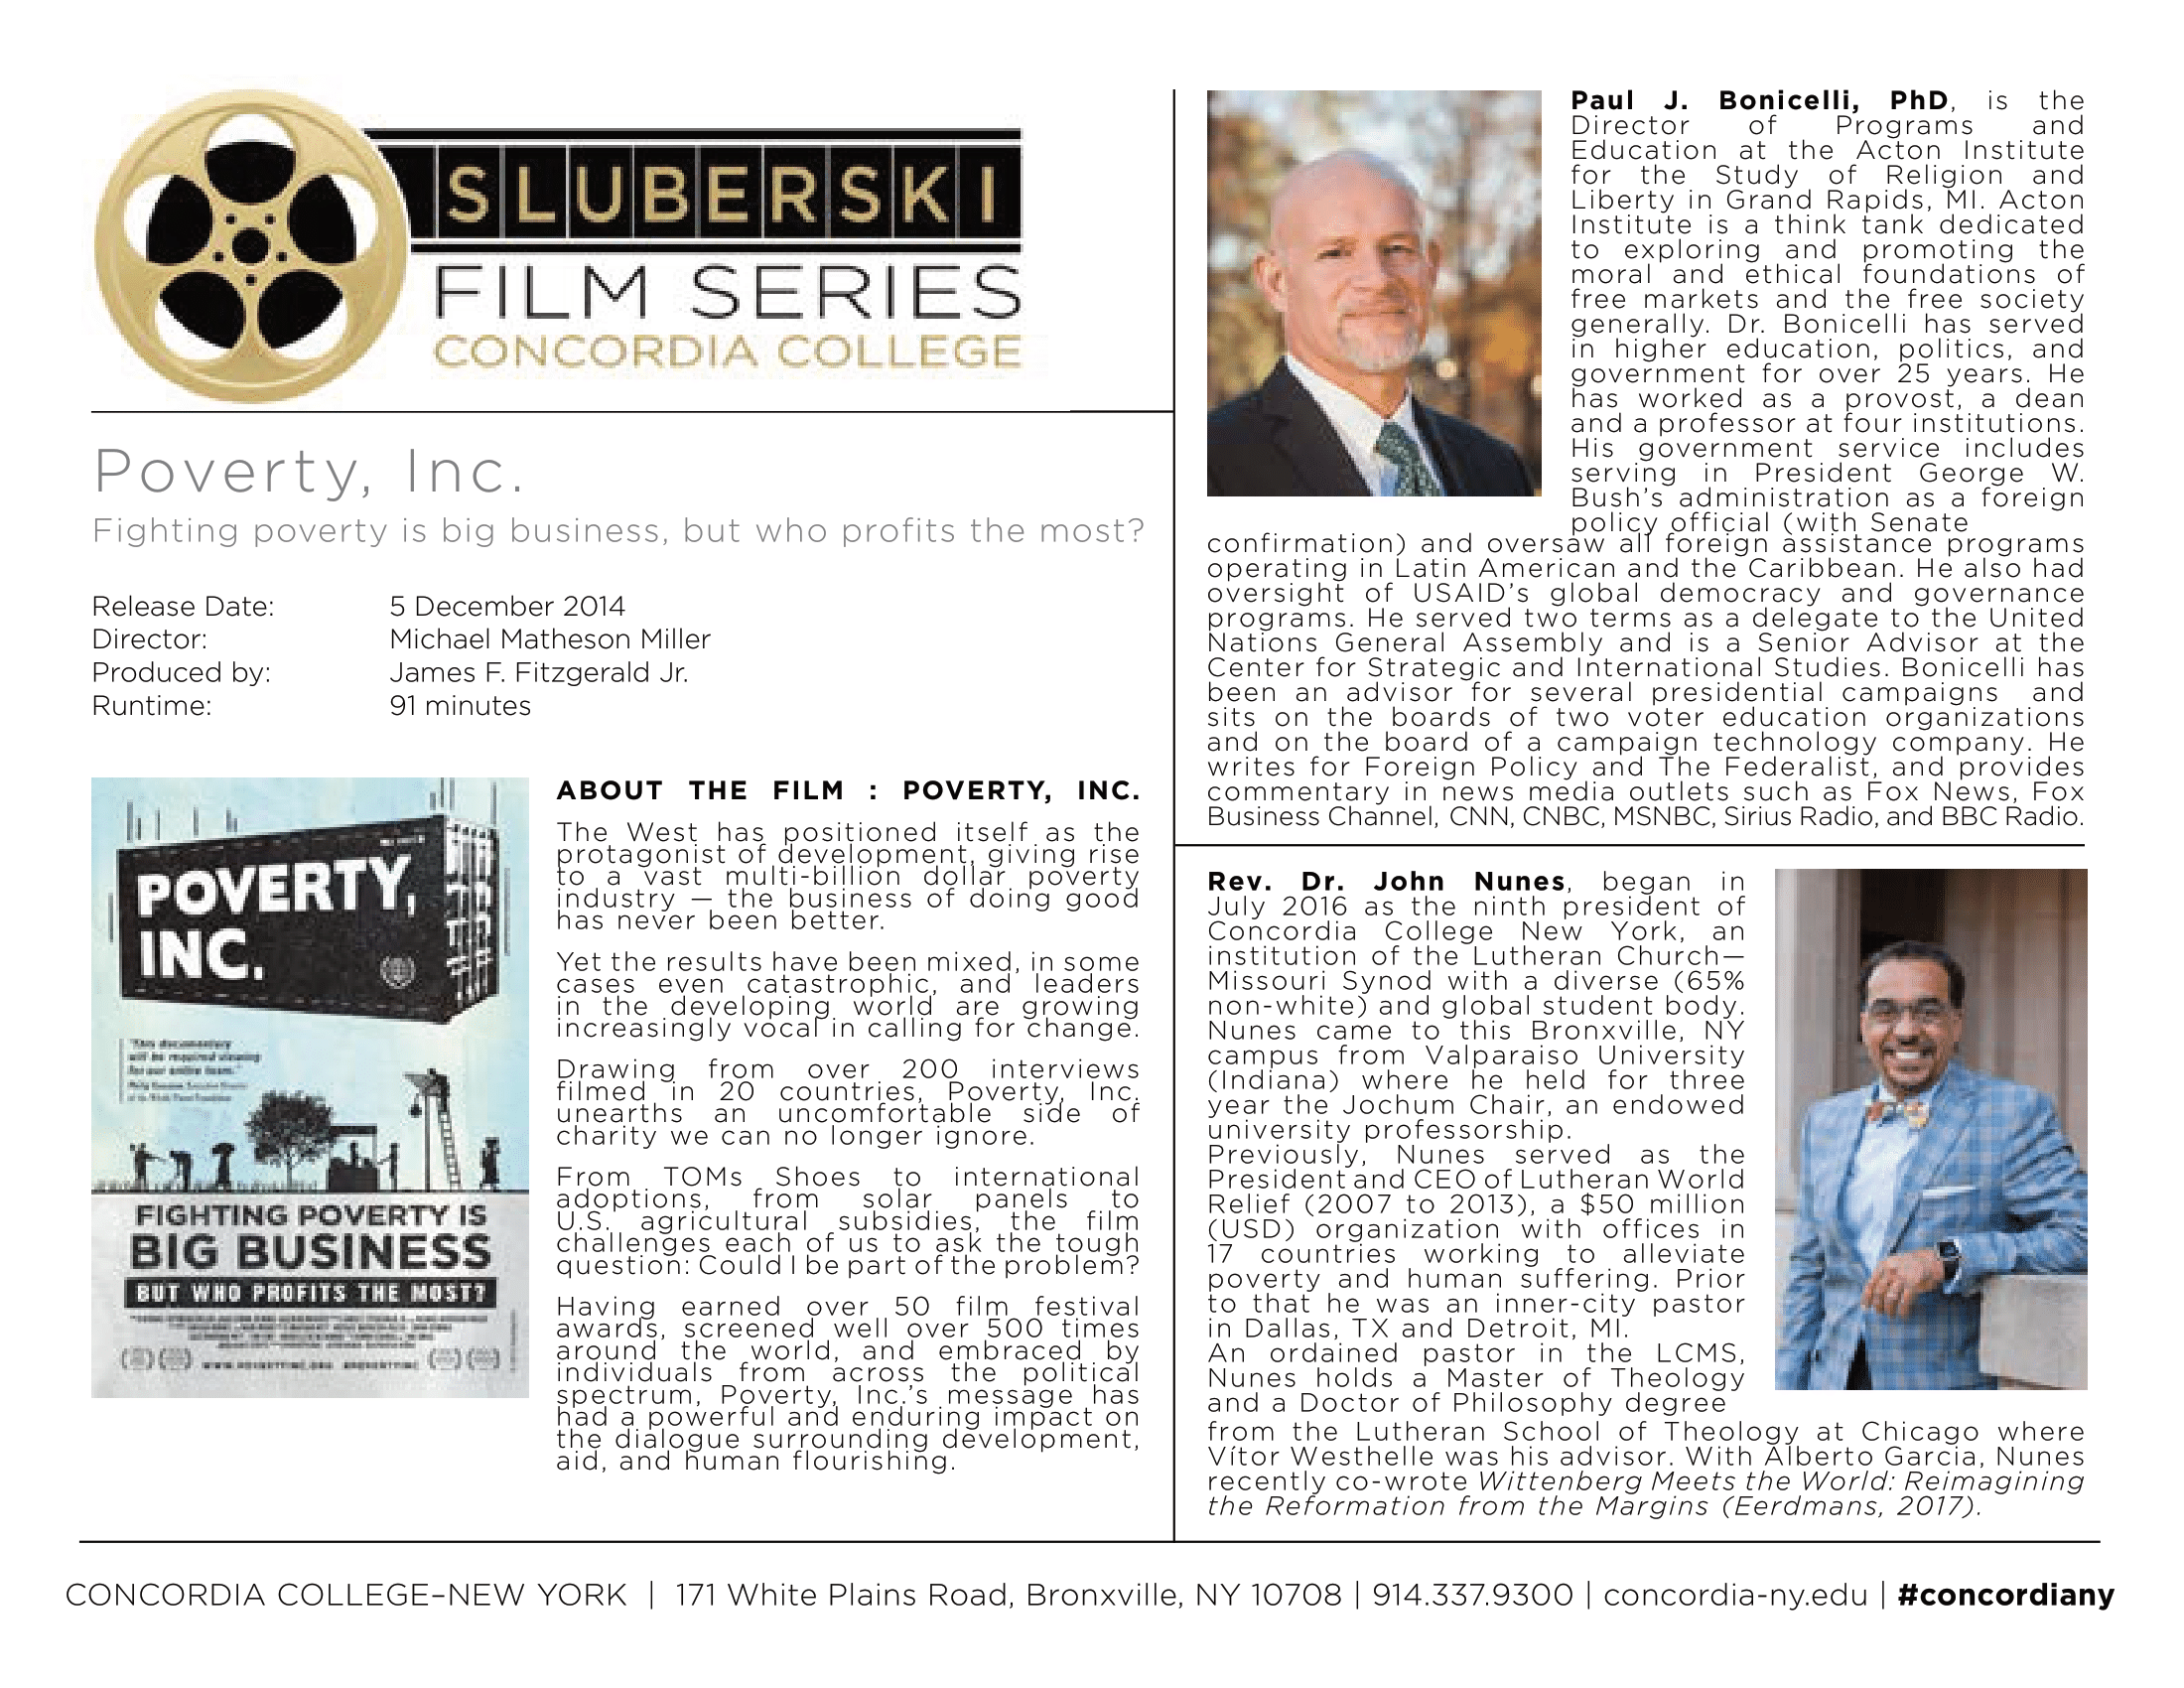 sluberski film series information sheet for poverty inc